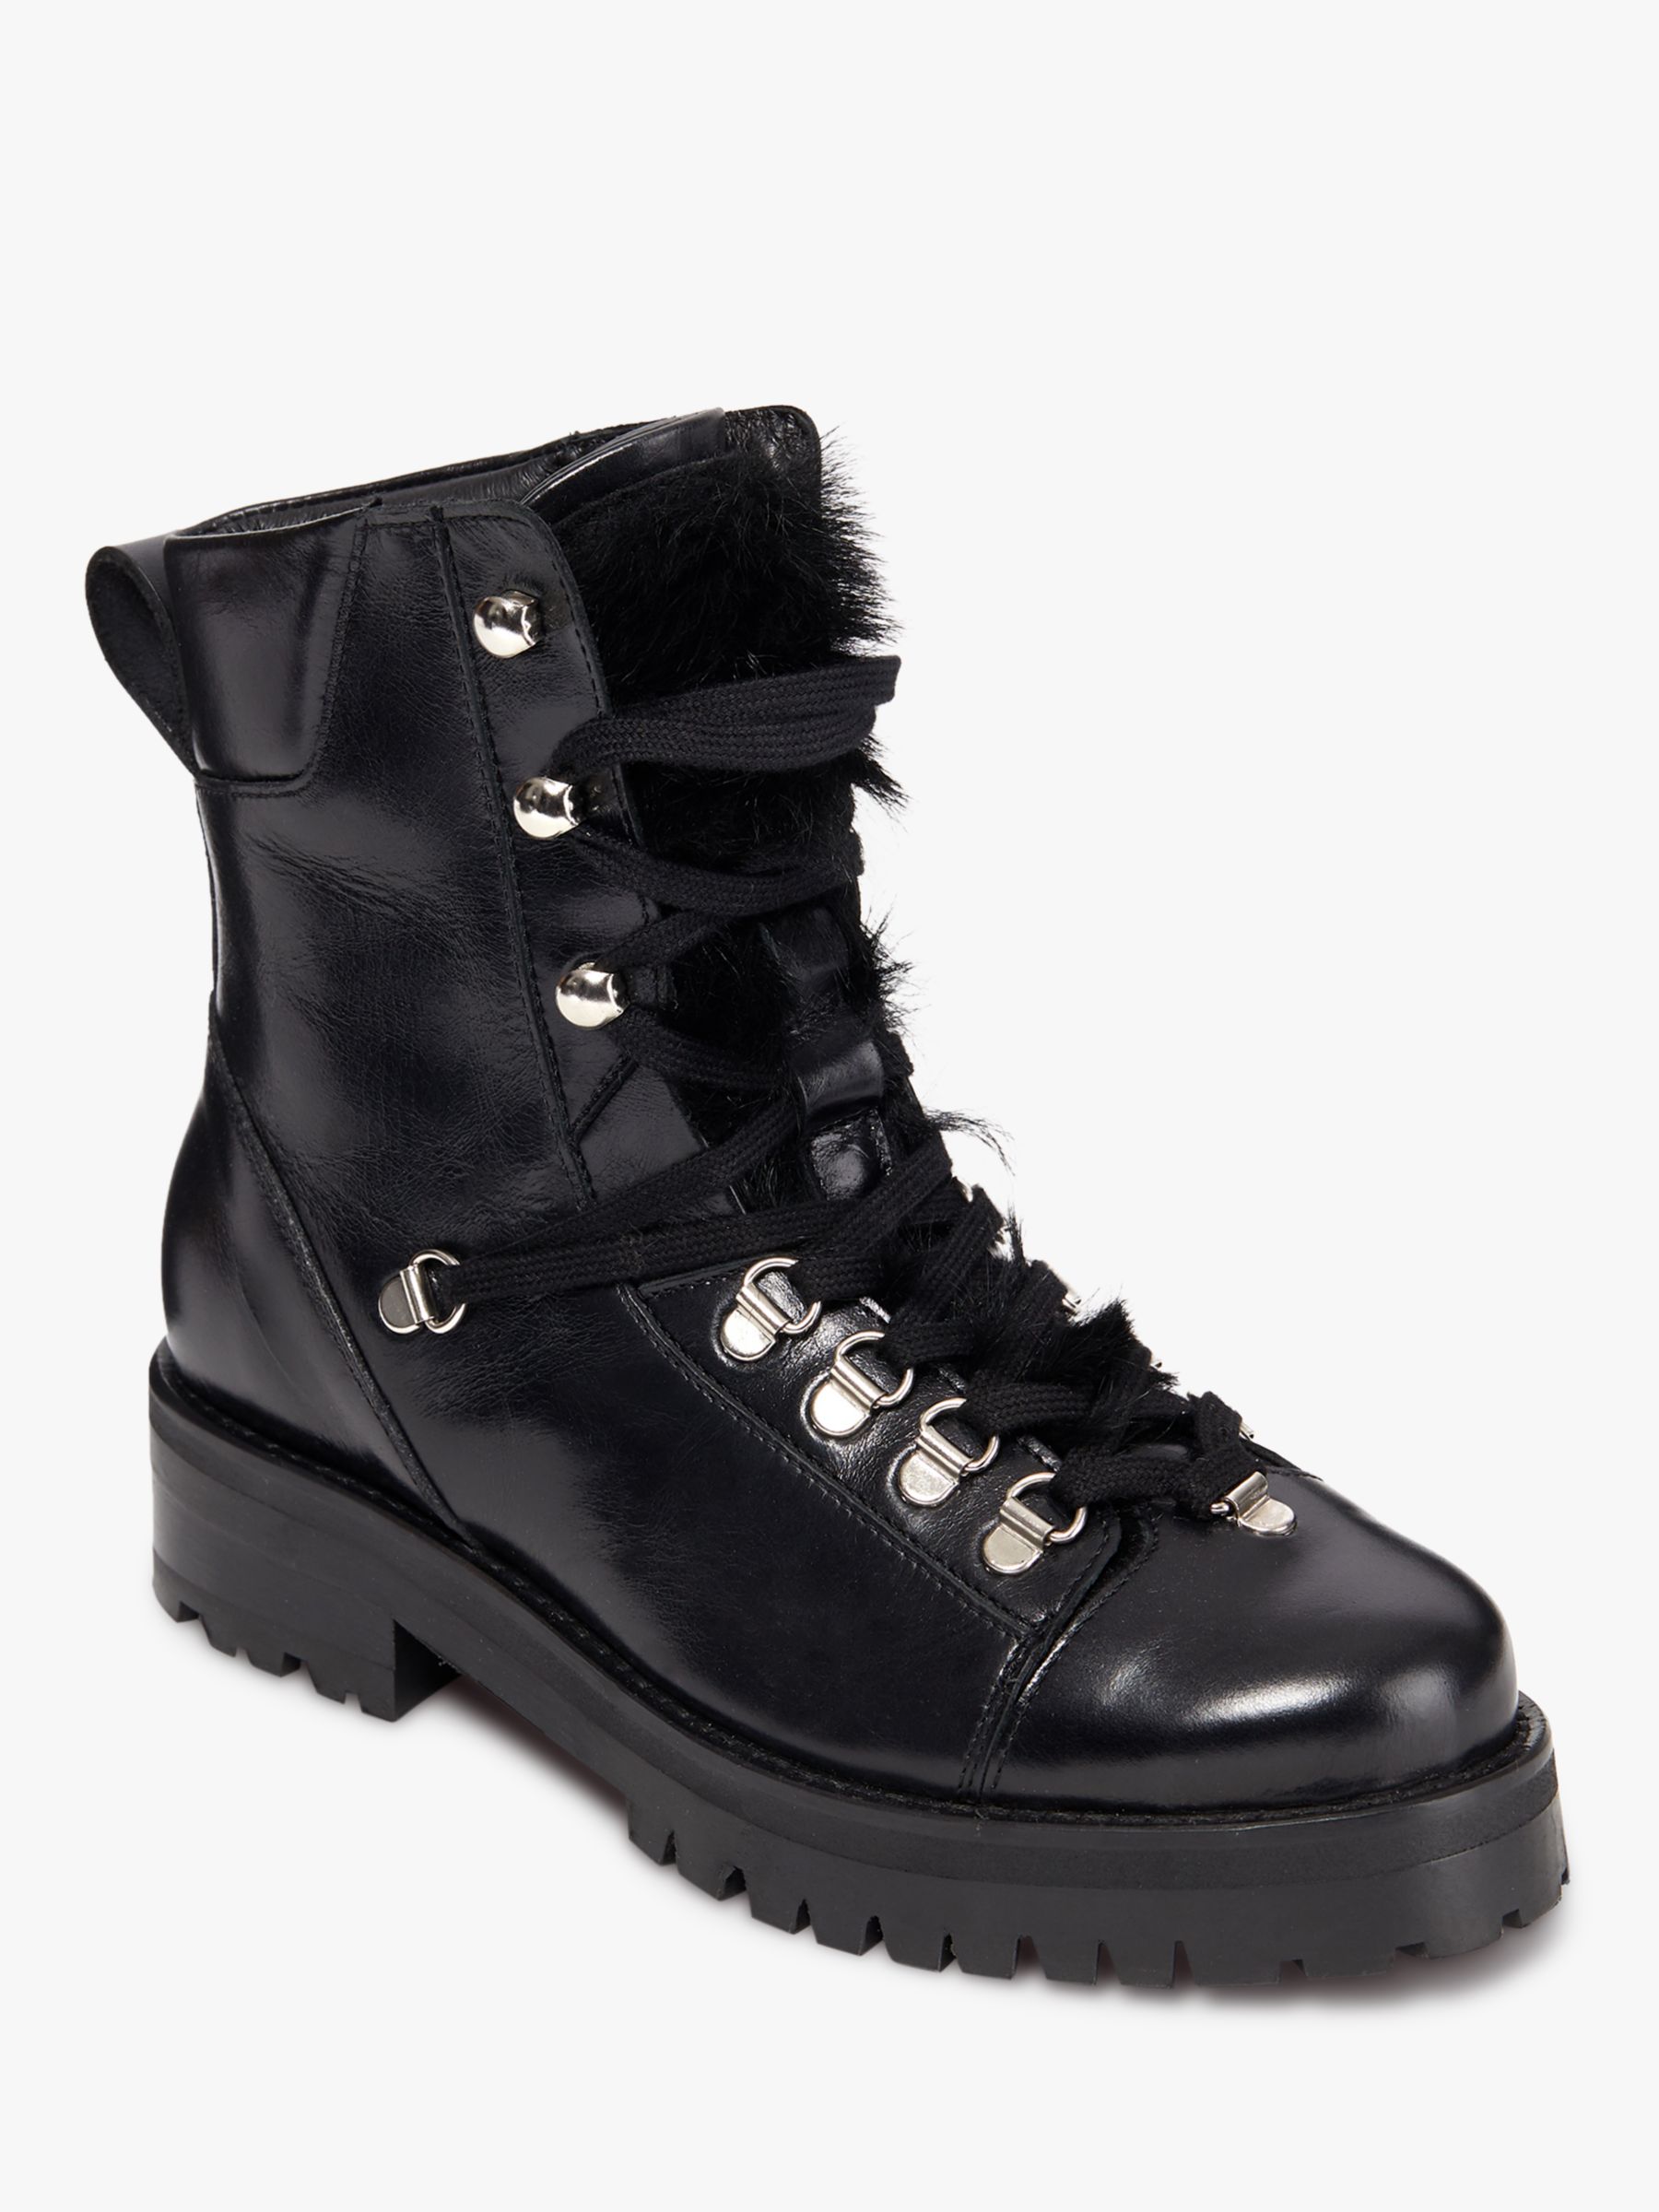 AllSaints Franka Leather Ankle Boots, Black at John Lewis & Partners